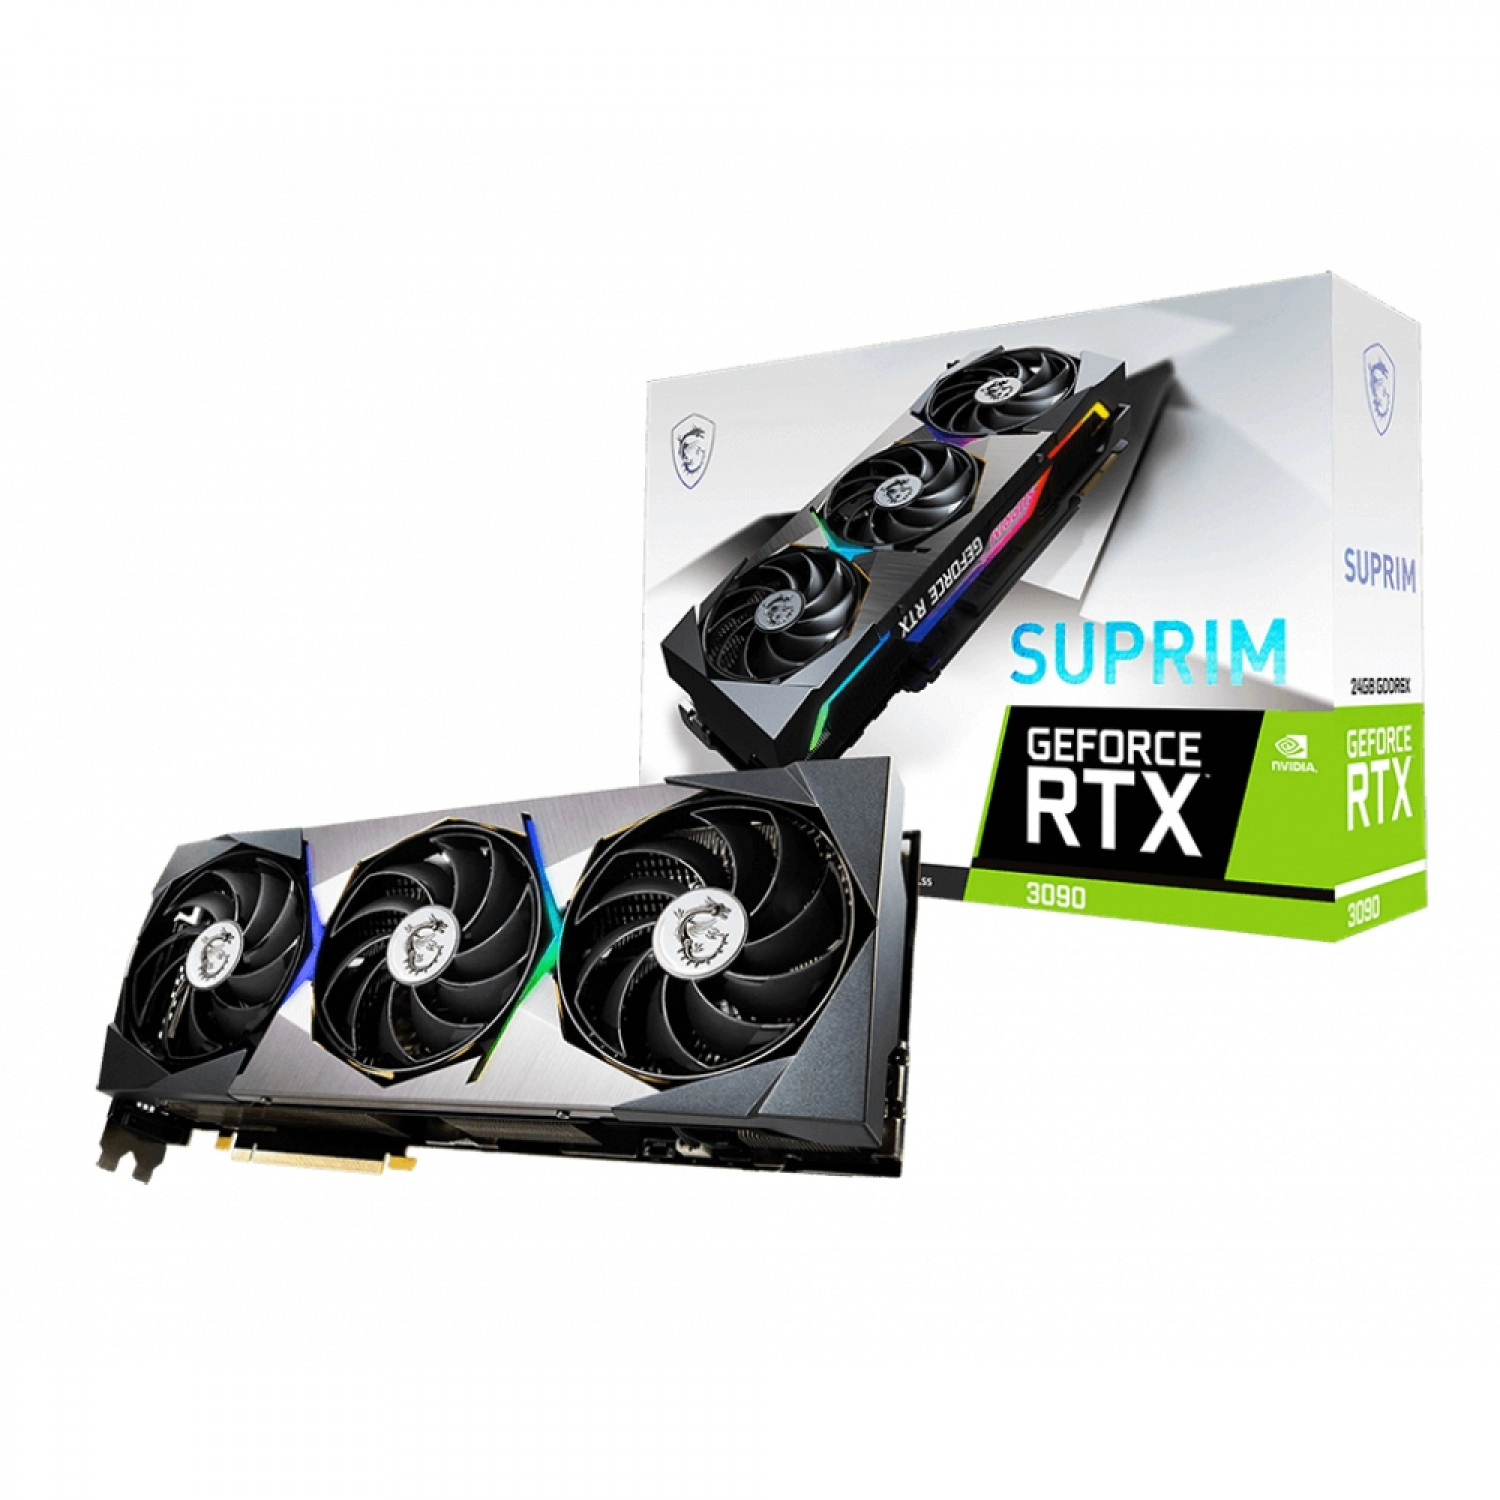 MSI GeForce RTX 3090 SUPRIM 24G Package